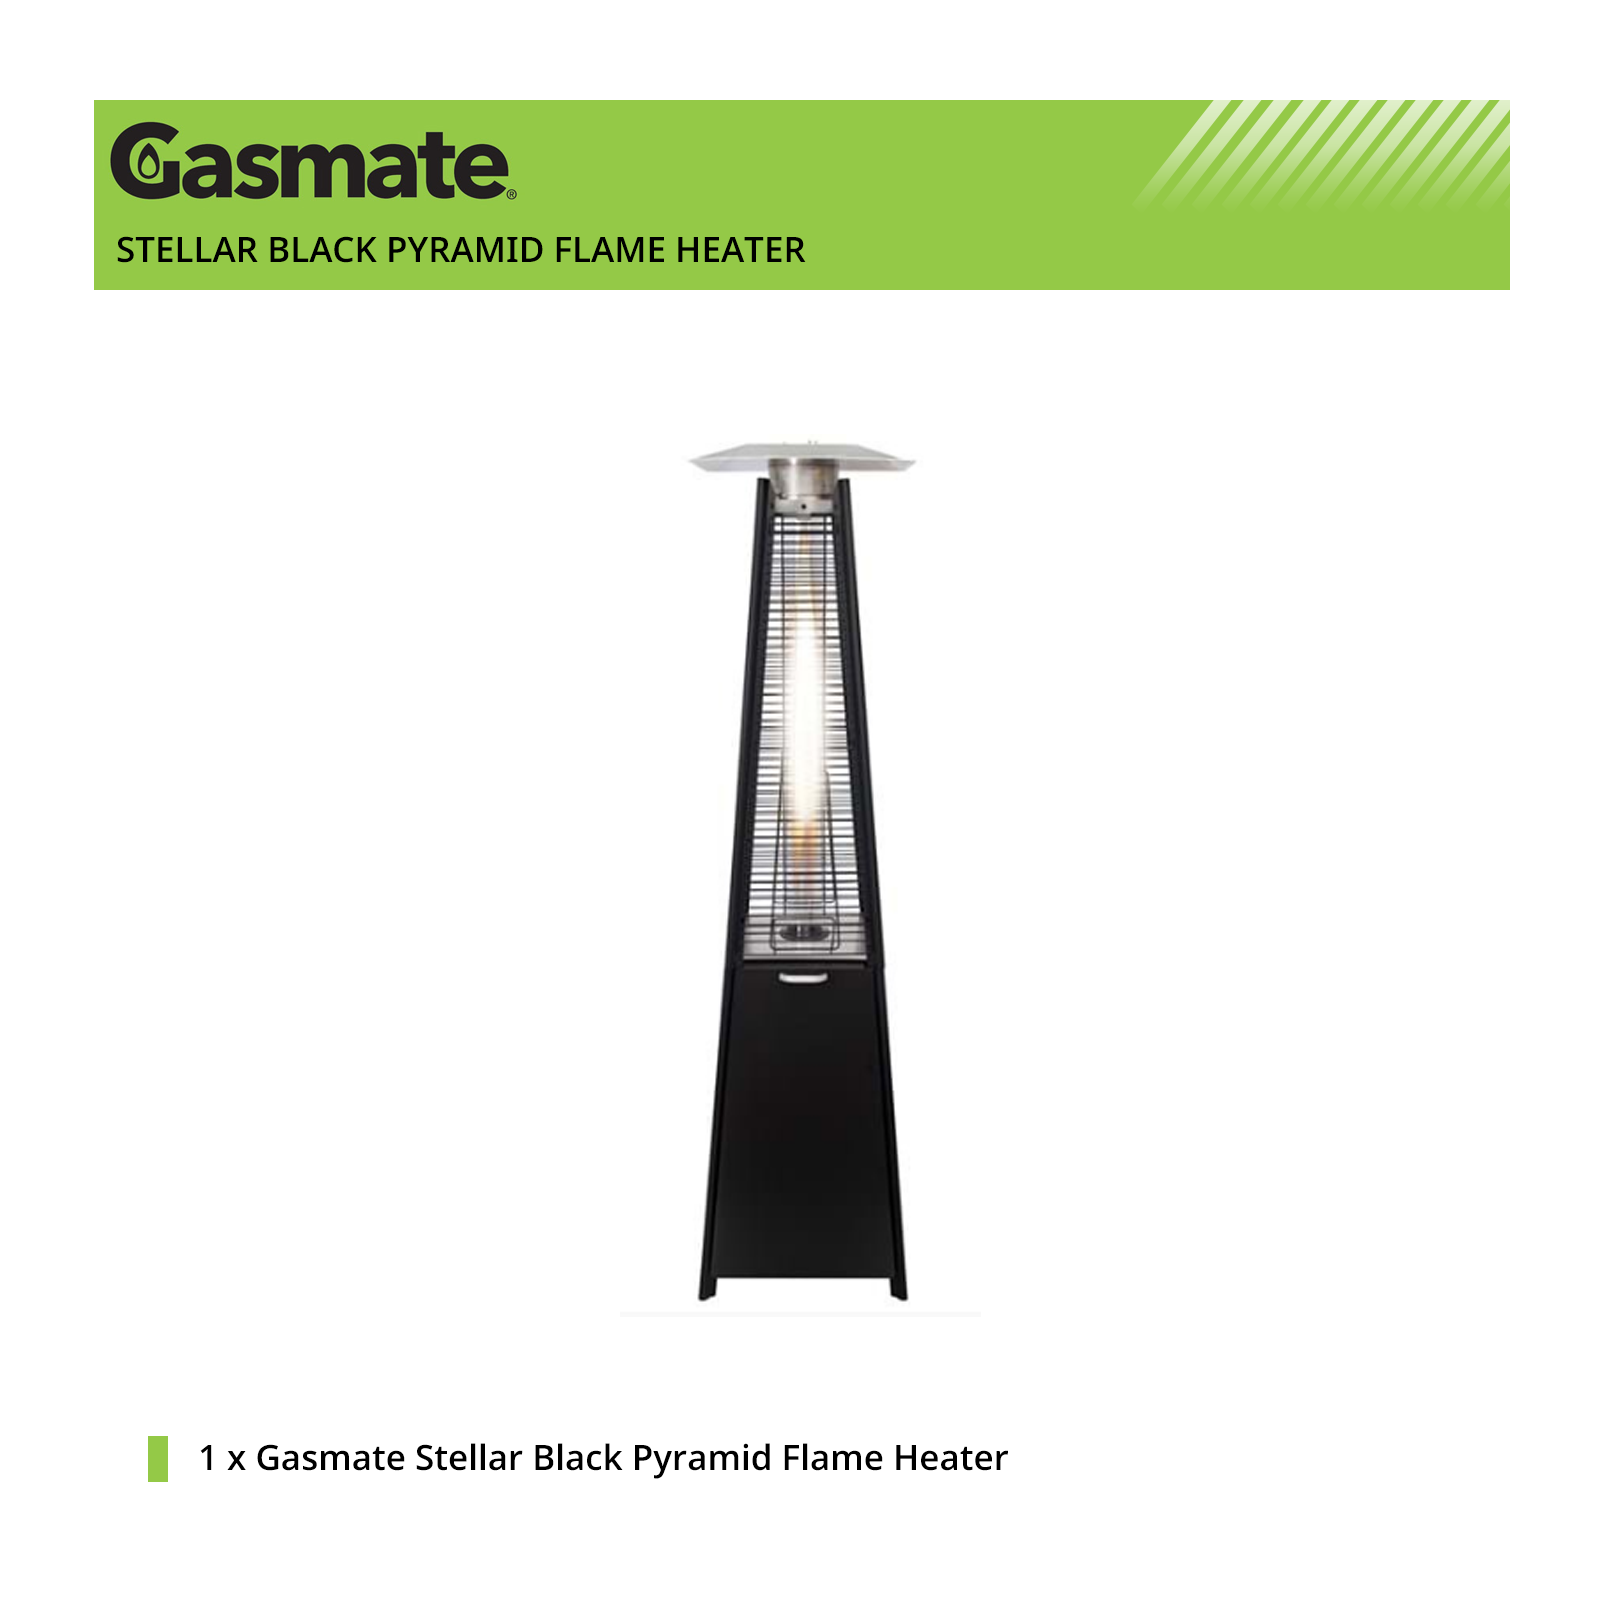 Gasmate - Stellar Black Pyramid Flame Heater